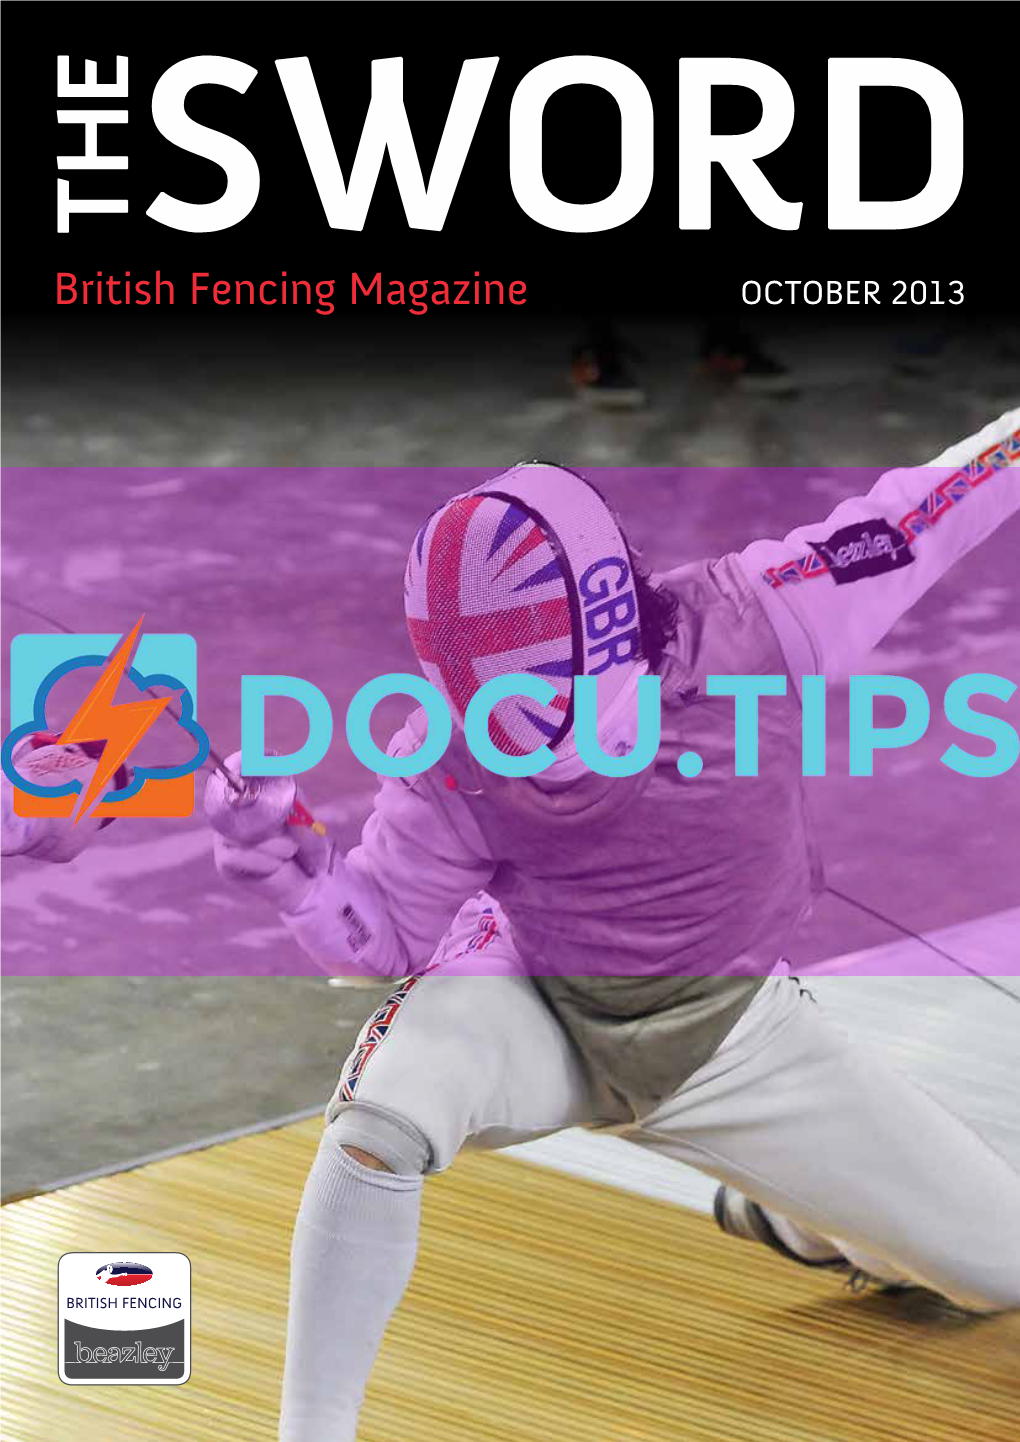 THE SWORD British Fencing Magazine October 2013